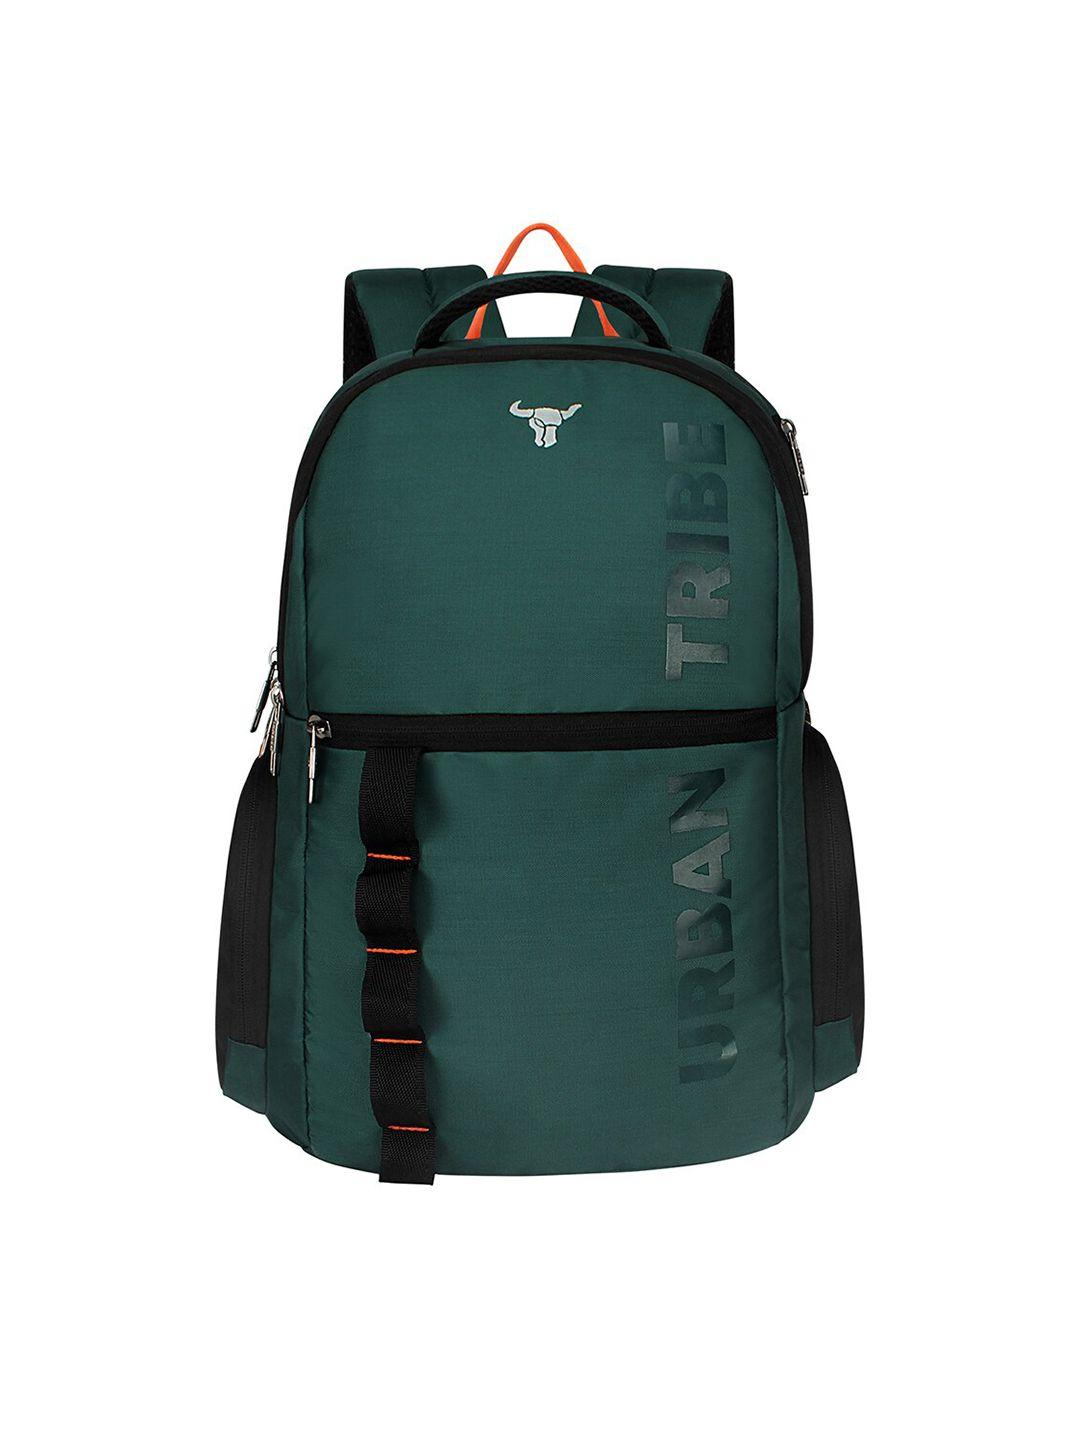 urban tribe unisex green backpack